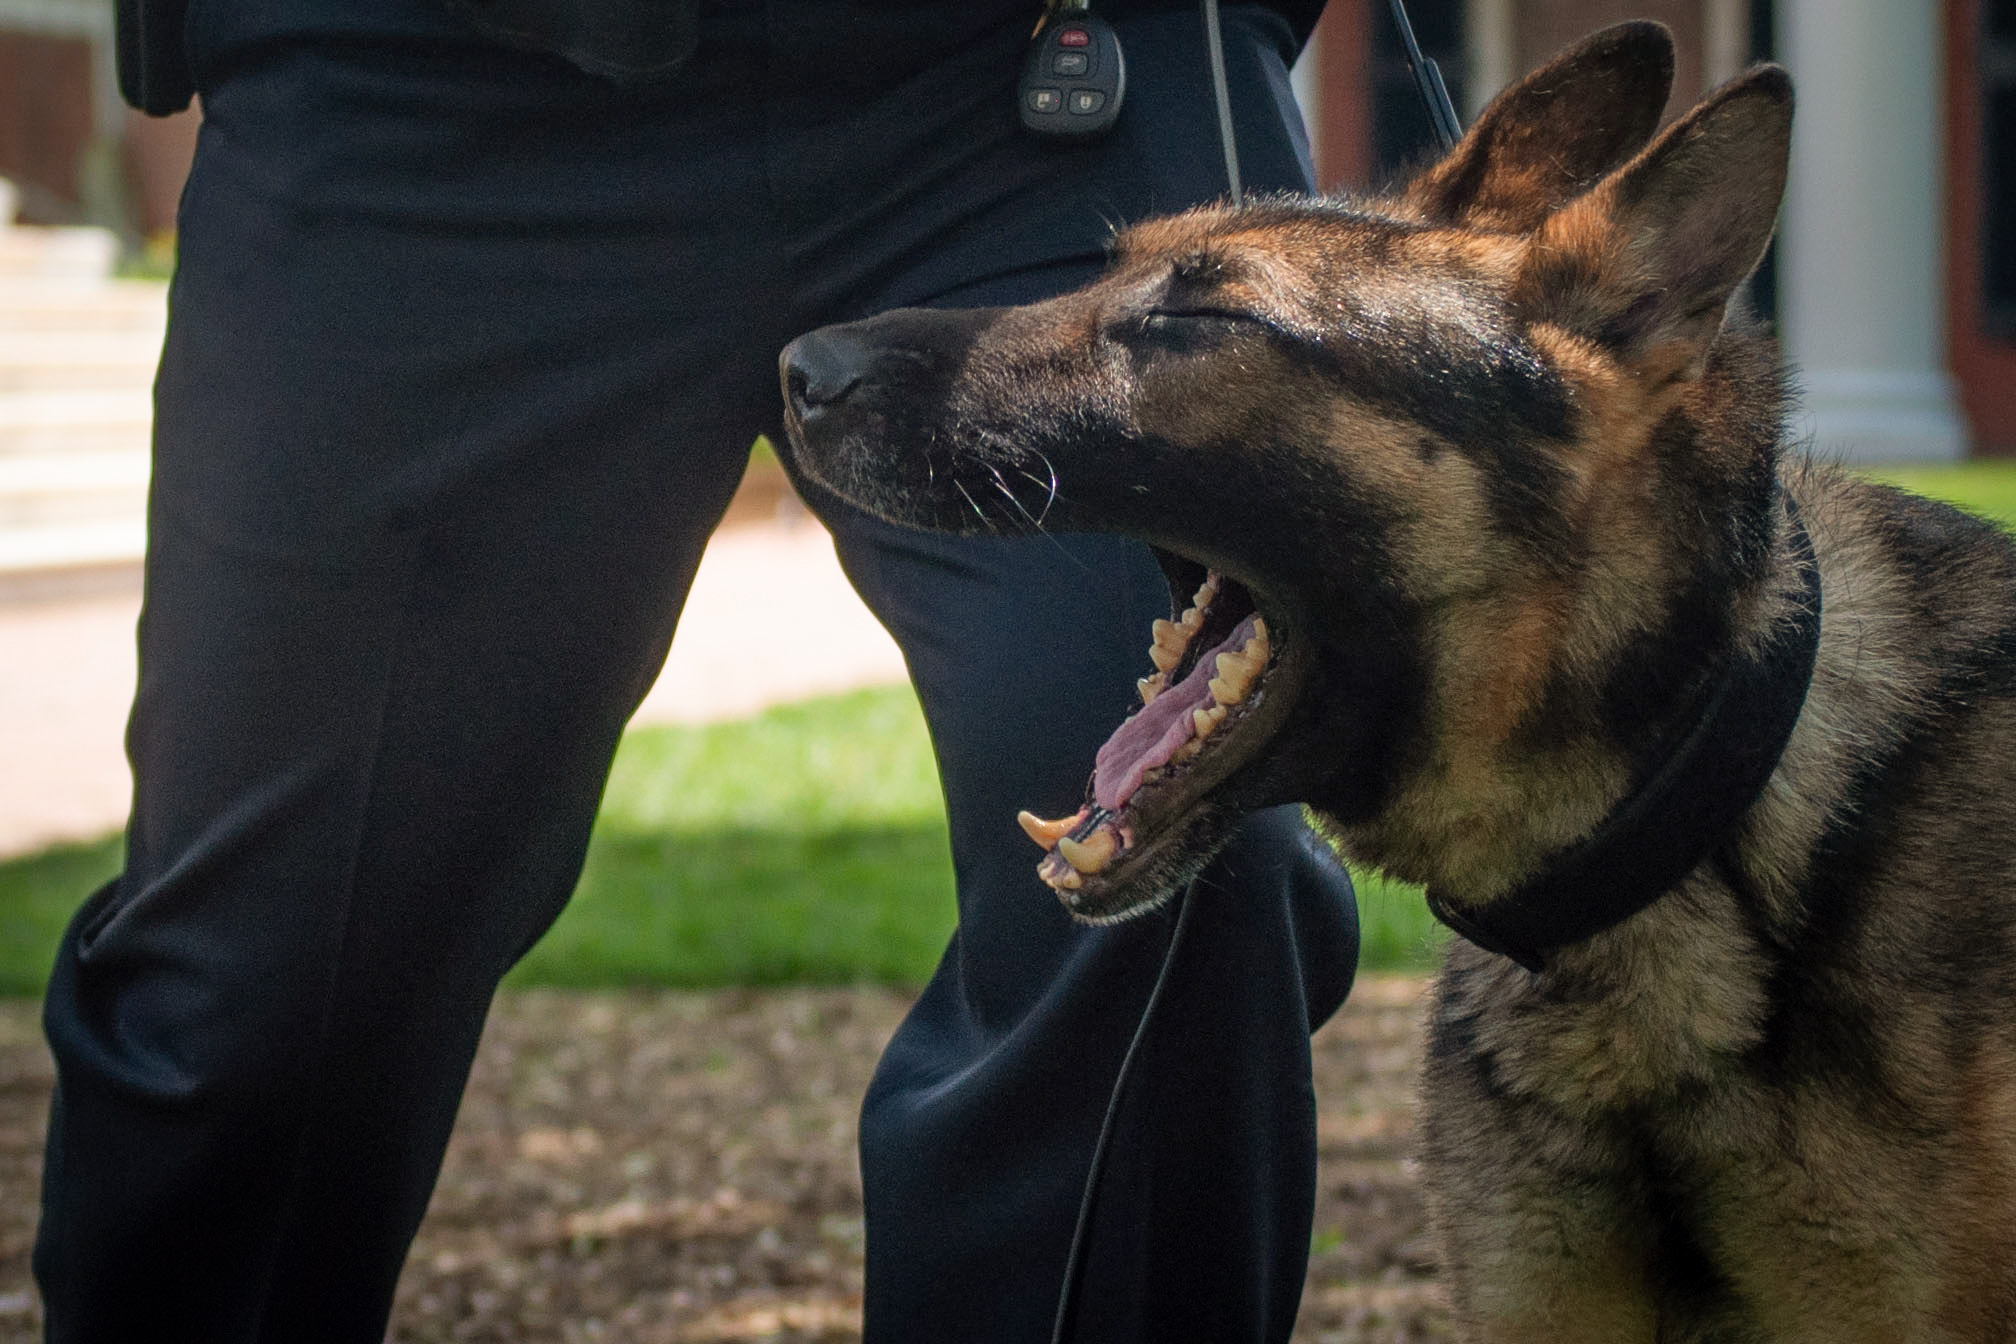 Rexo the police dog yawning